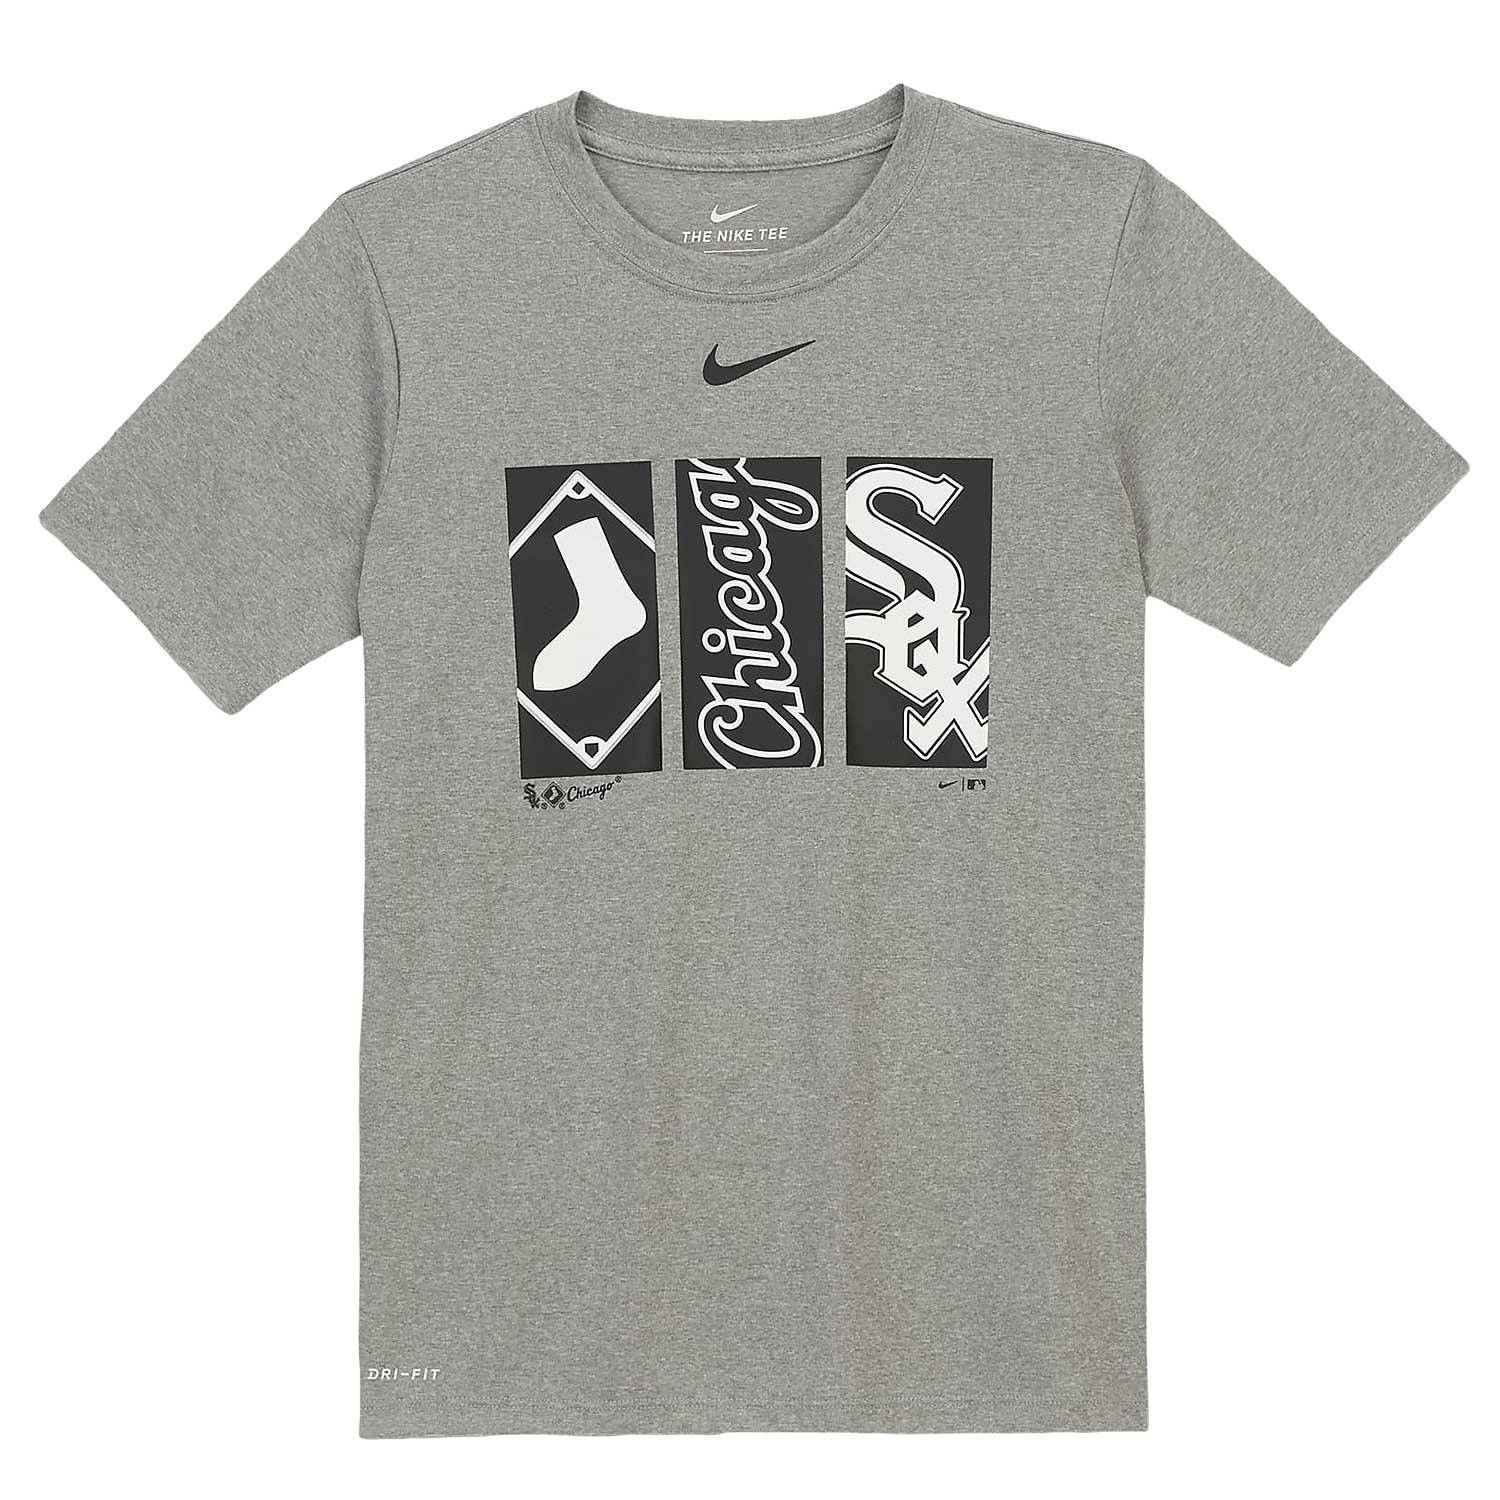 Nike Chicago White Sox Youth 3peat Team Logo Short Sleeved Legend Tee Medium = 10-12